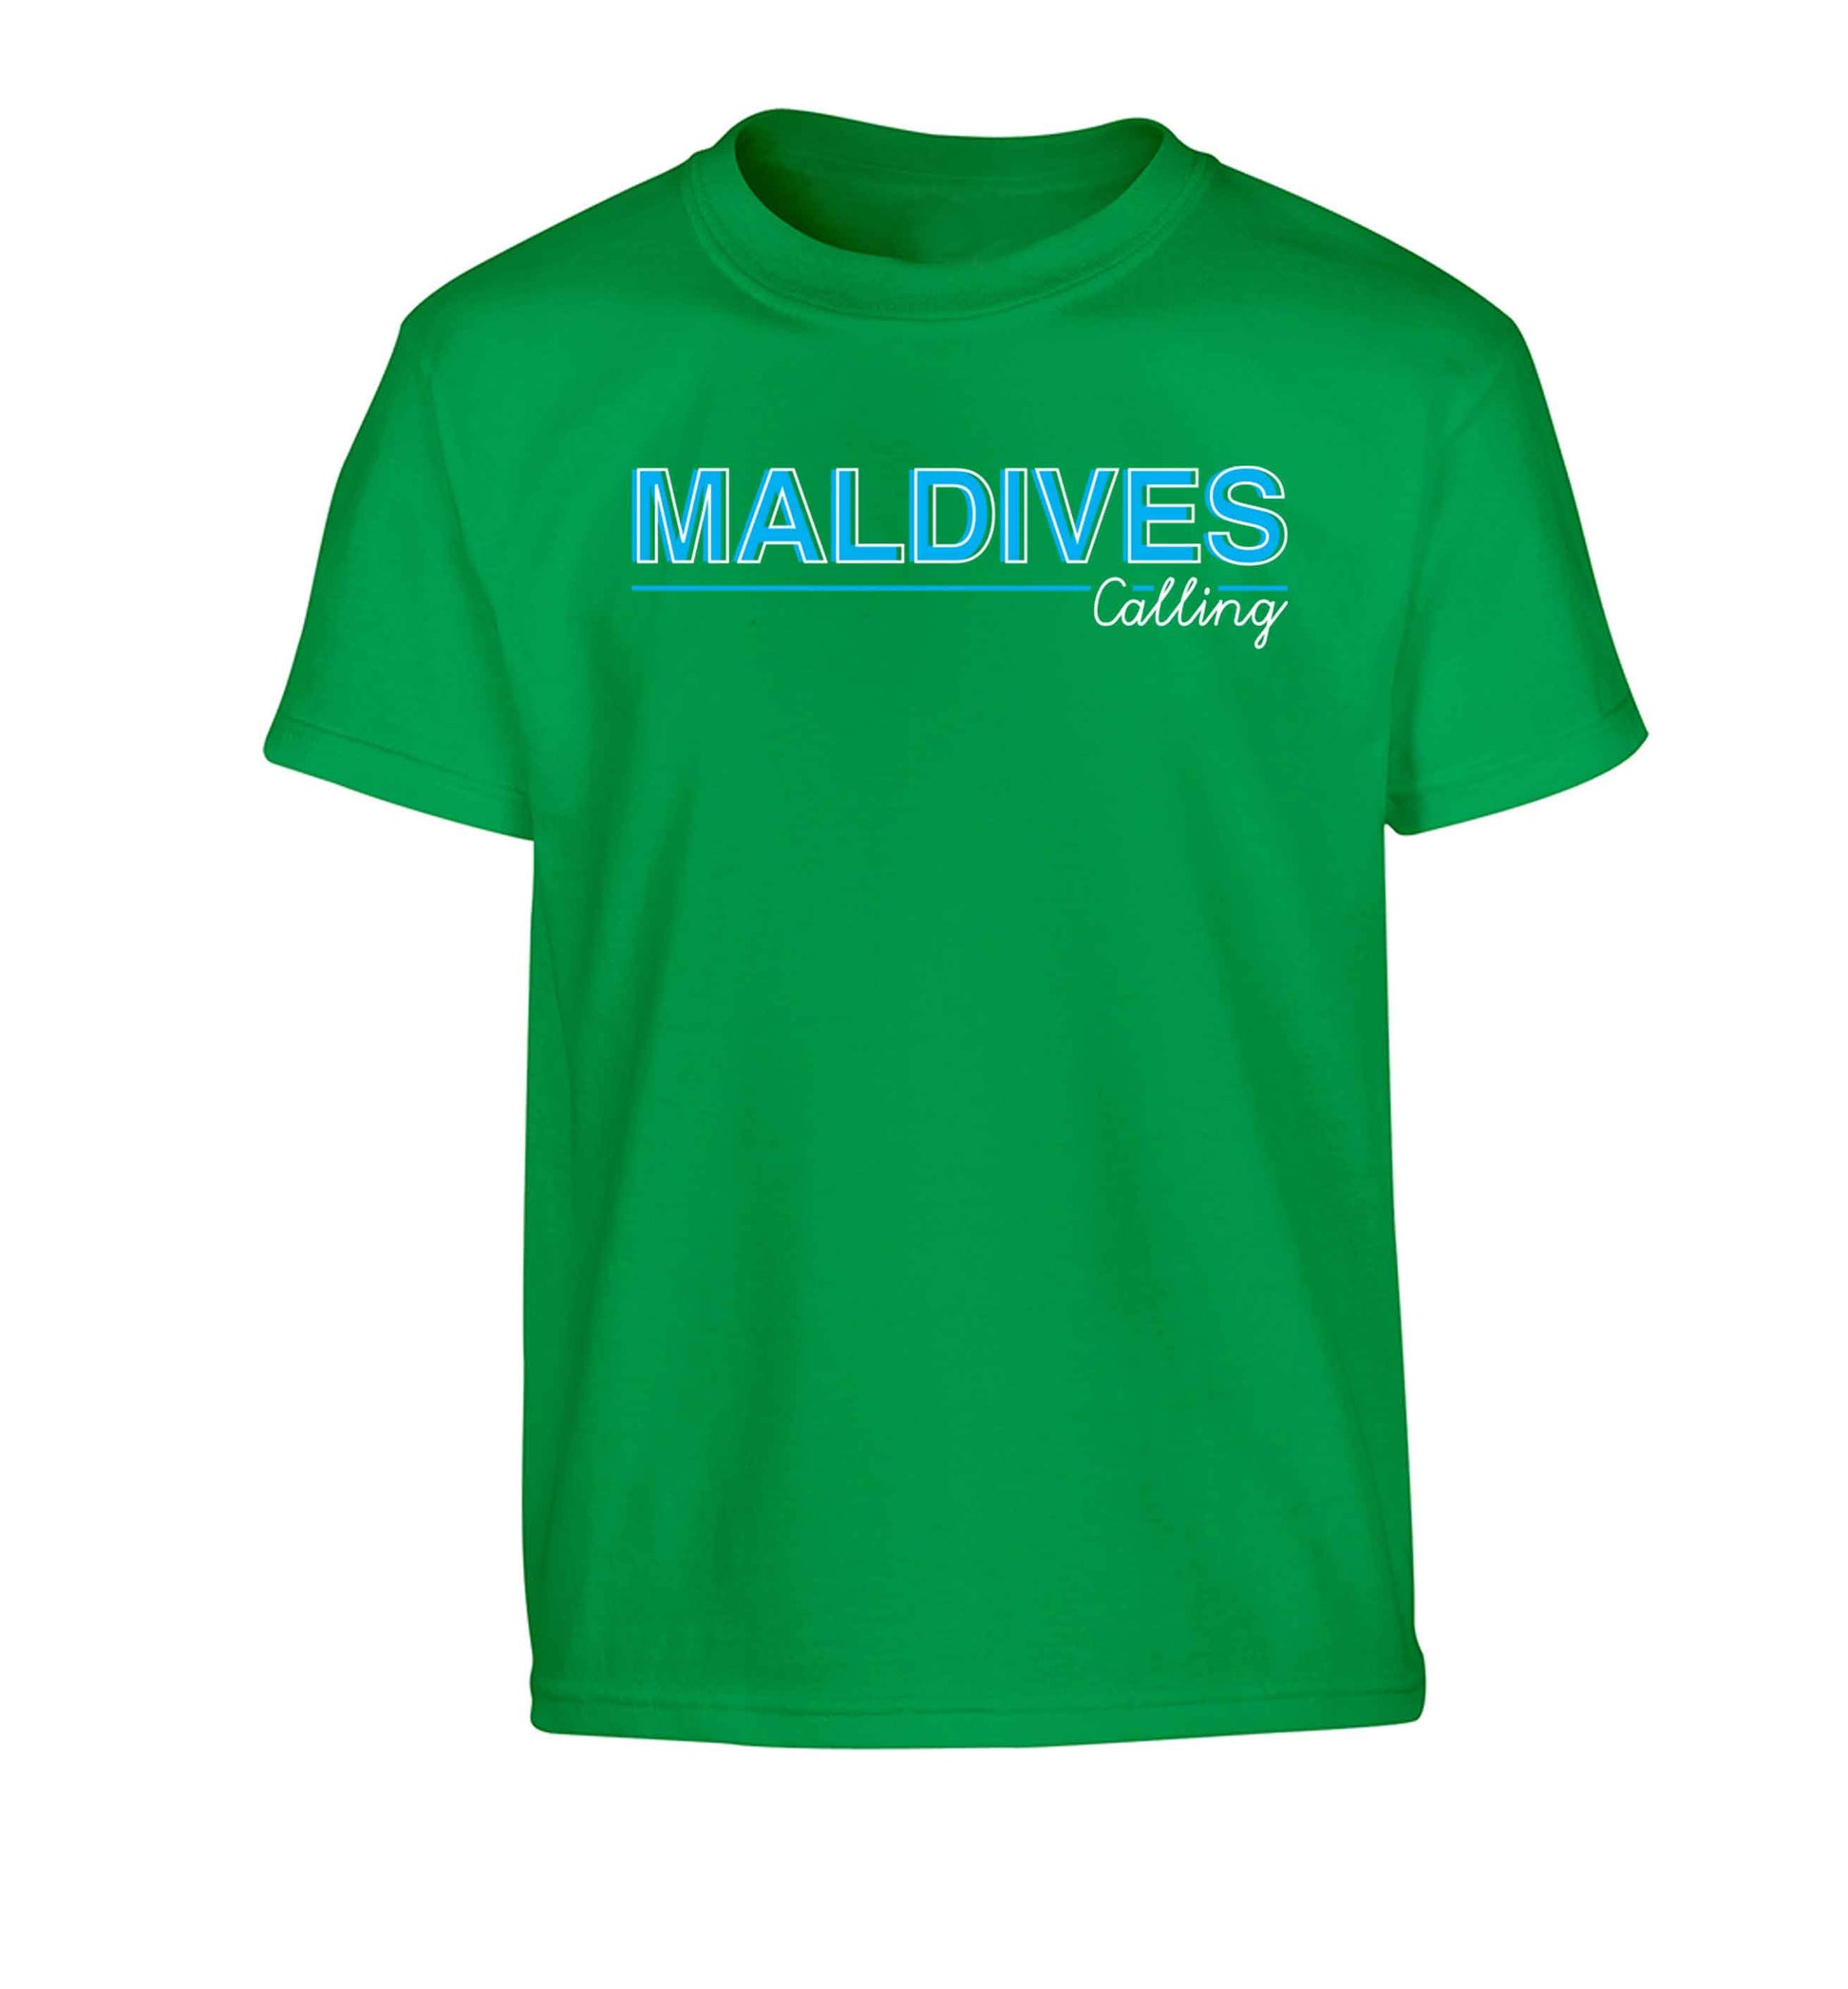 Maldives calling Children's green Tshirt 12-13 Years